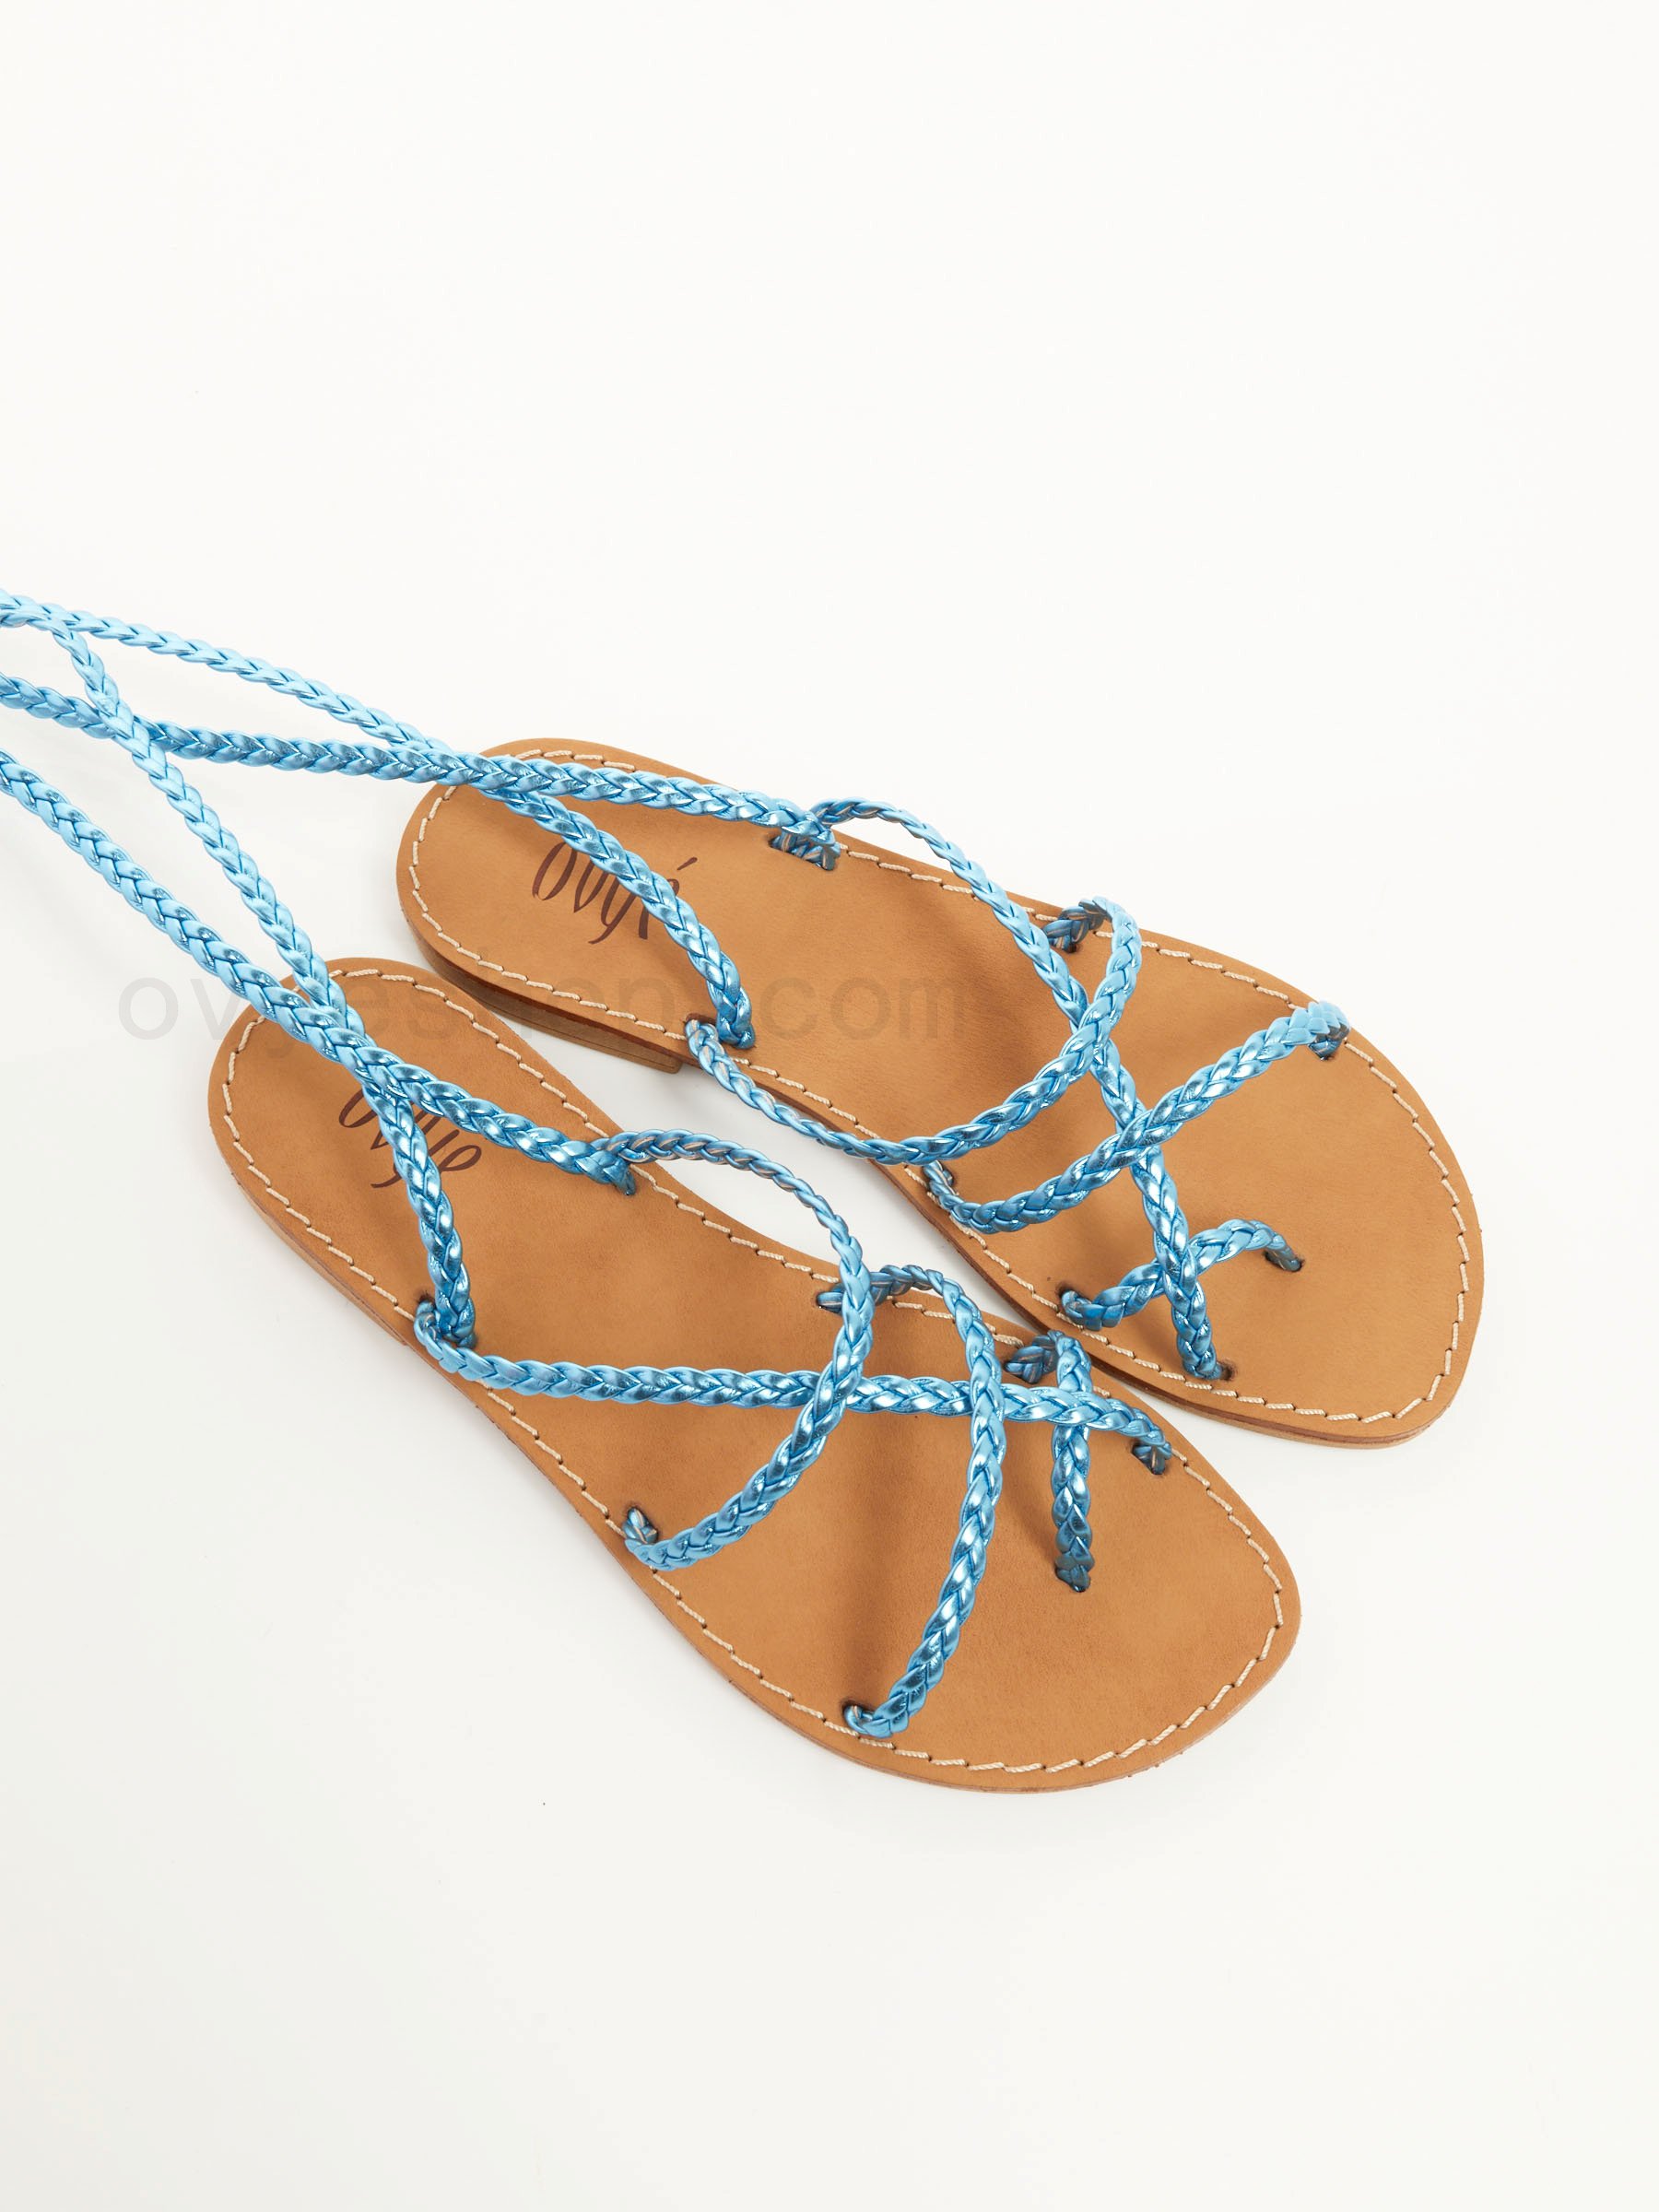 ovye scarpe shop online Leather Sandals F0817885-0442